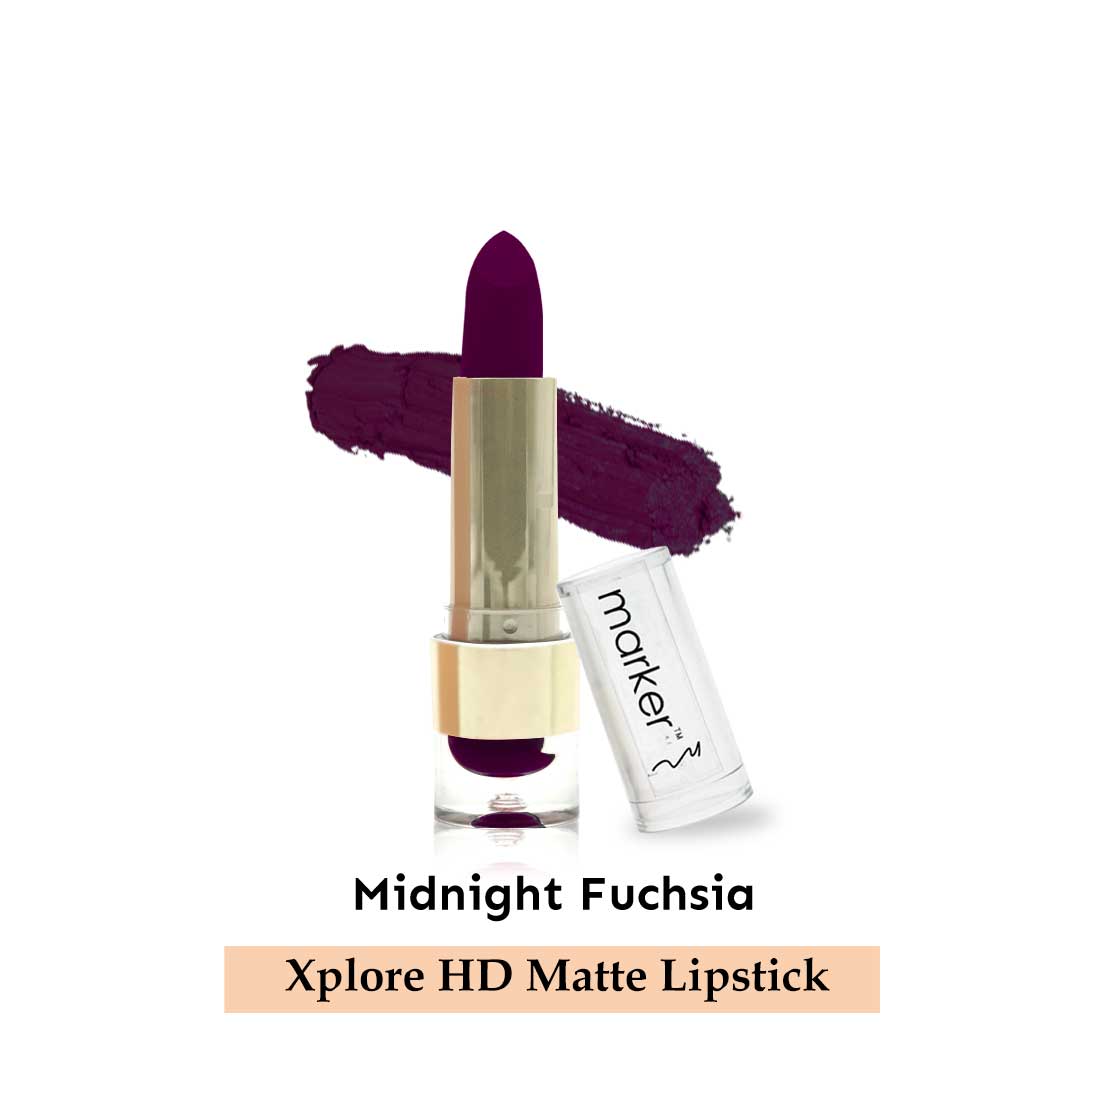 Xplore HD Matte Lipstick